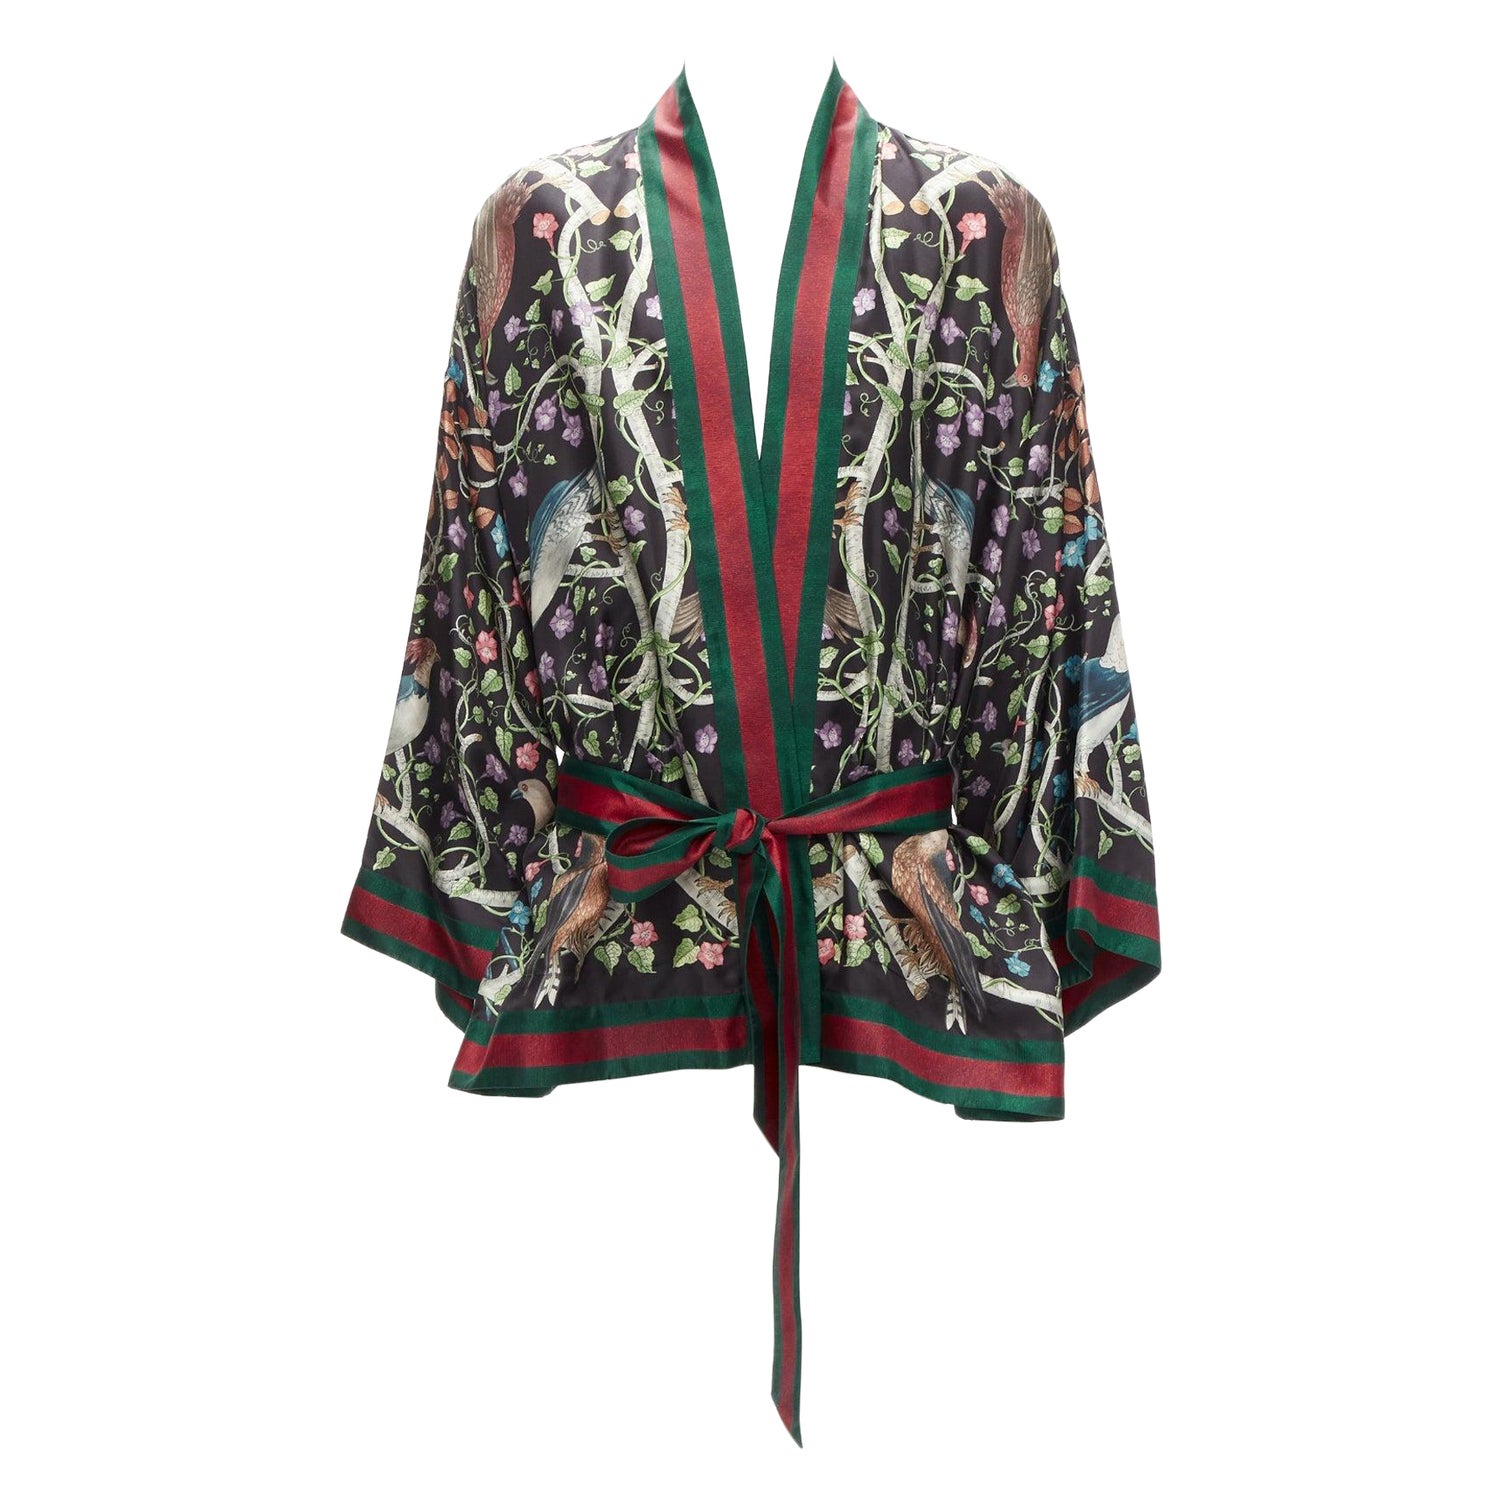 Gucci Beige Cashmere/ Silk Bodysuit Size L